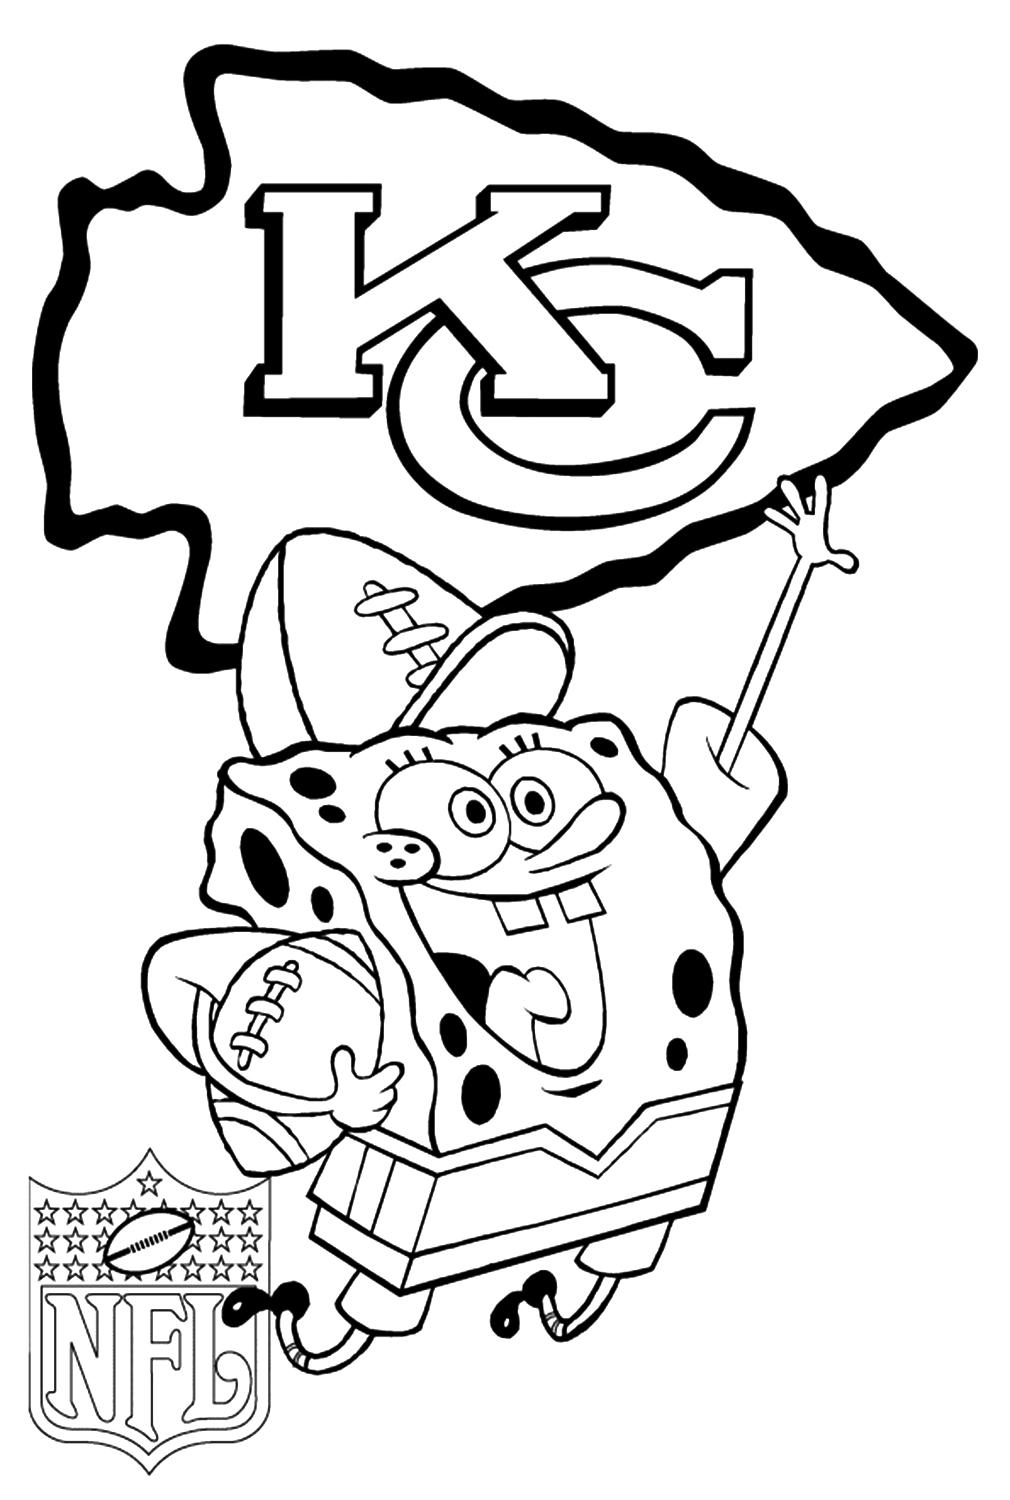 Kansas City Chiefs with Spongebob from Kansas City Chiefs